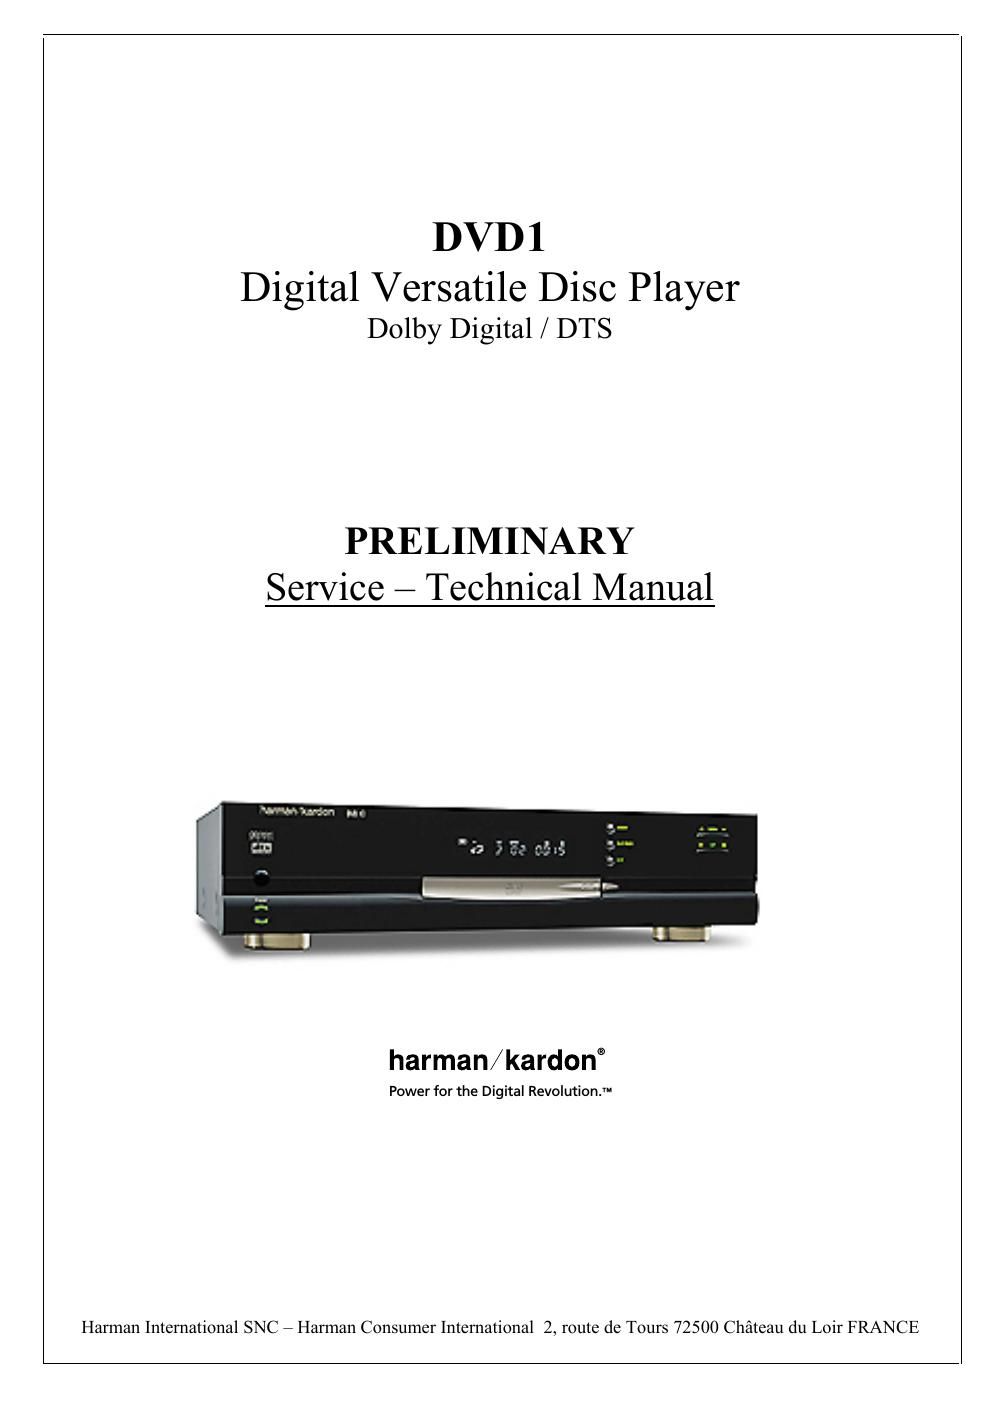 harman kardon dvd 1 service manual